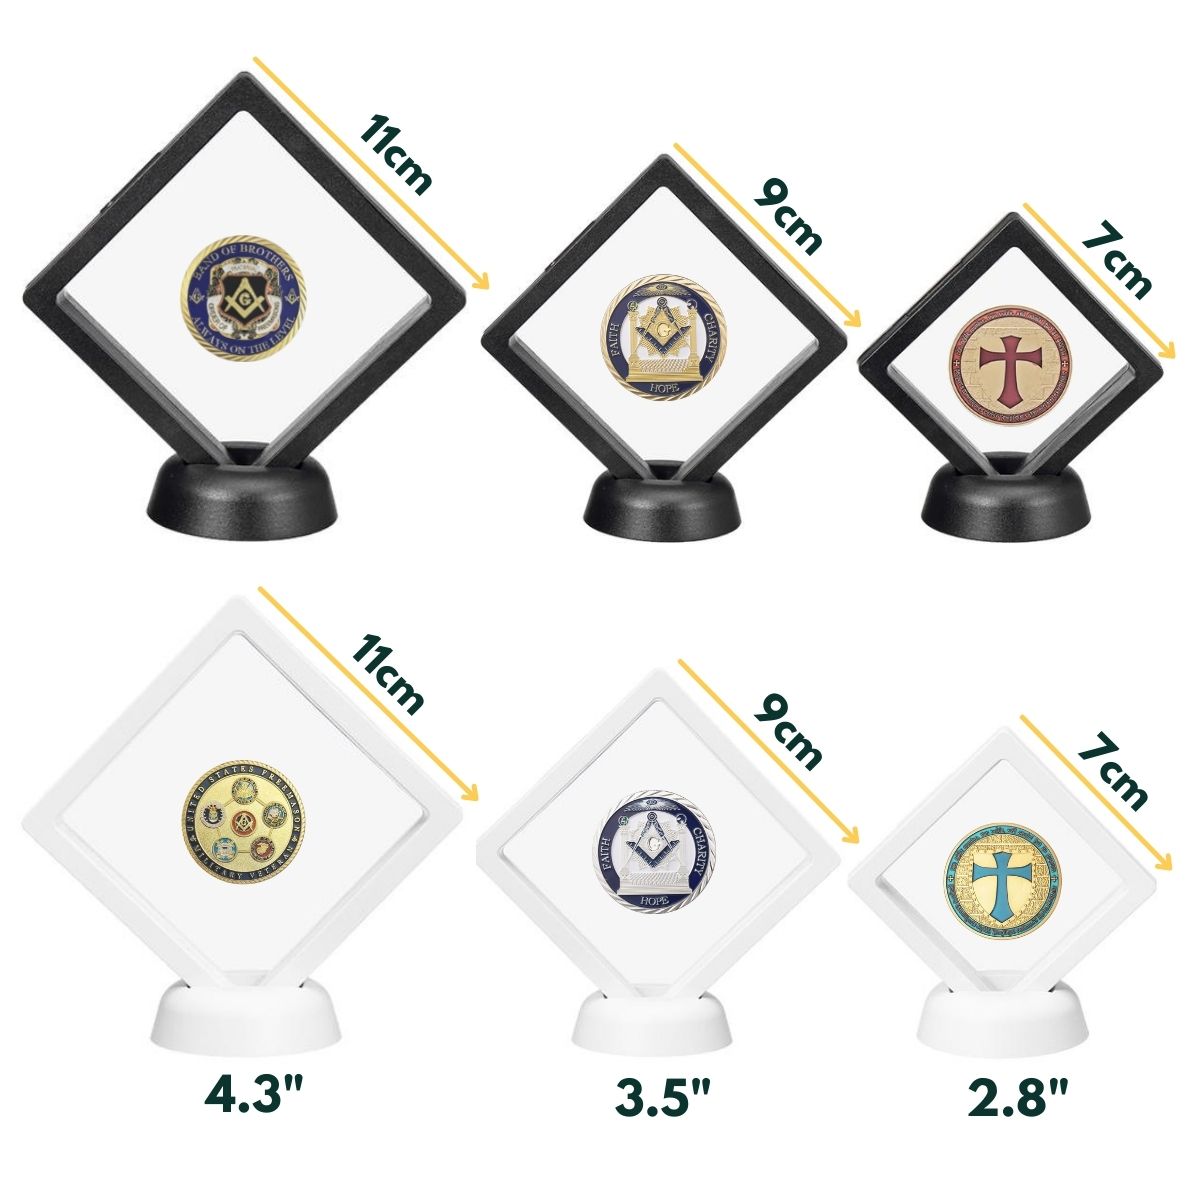 Masonic Coins Holder - 3D Floating Coin Display Black & White - Bricks Masons